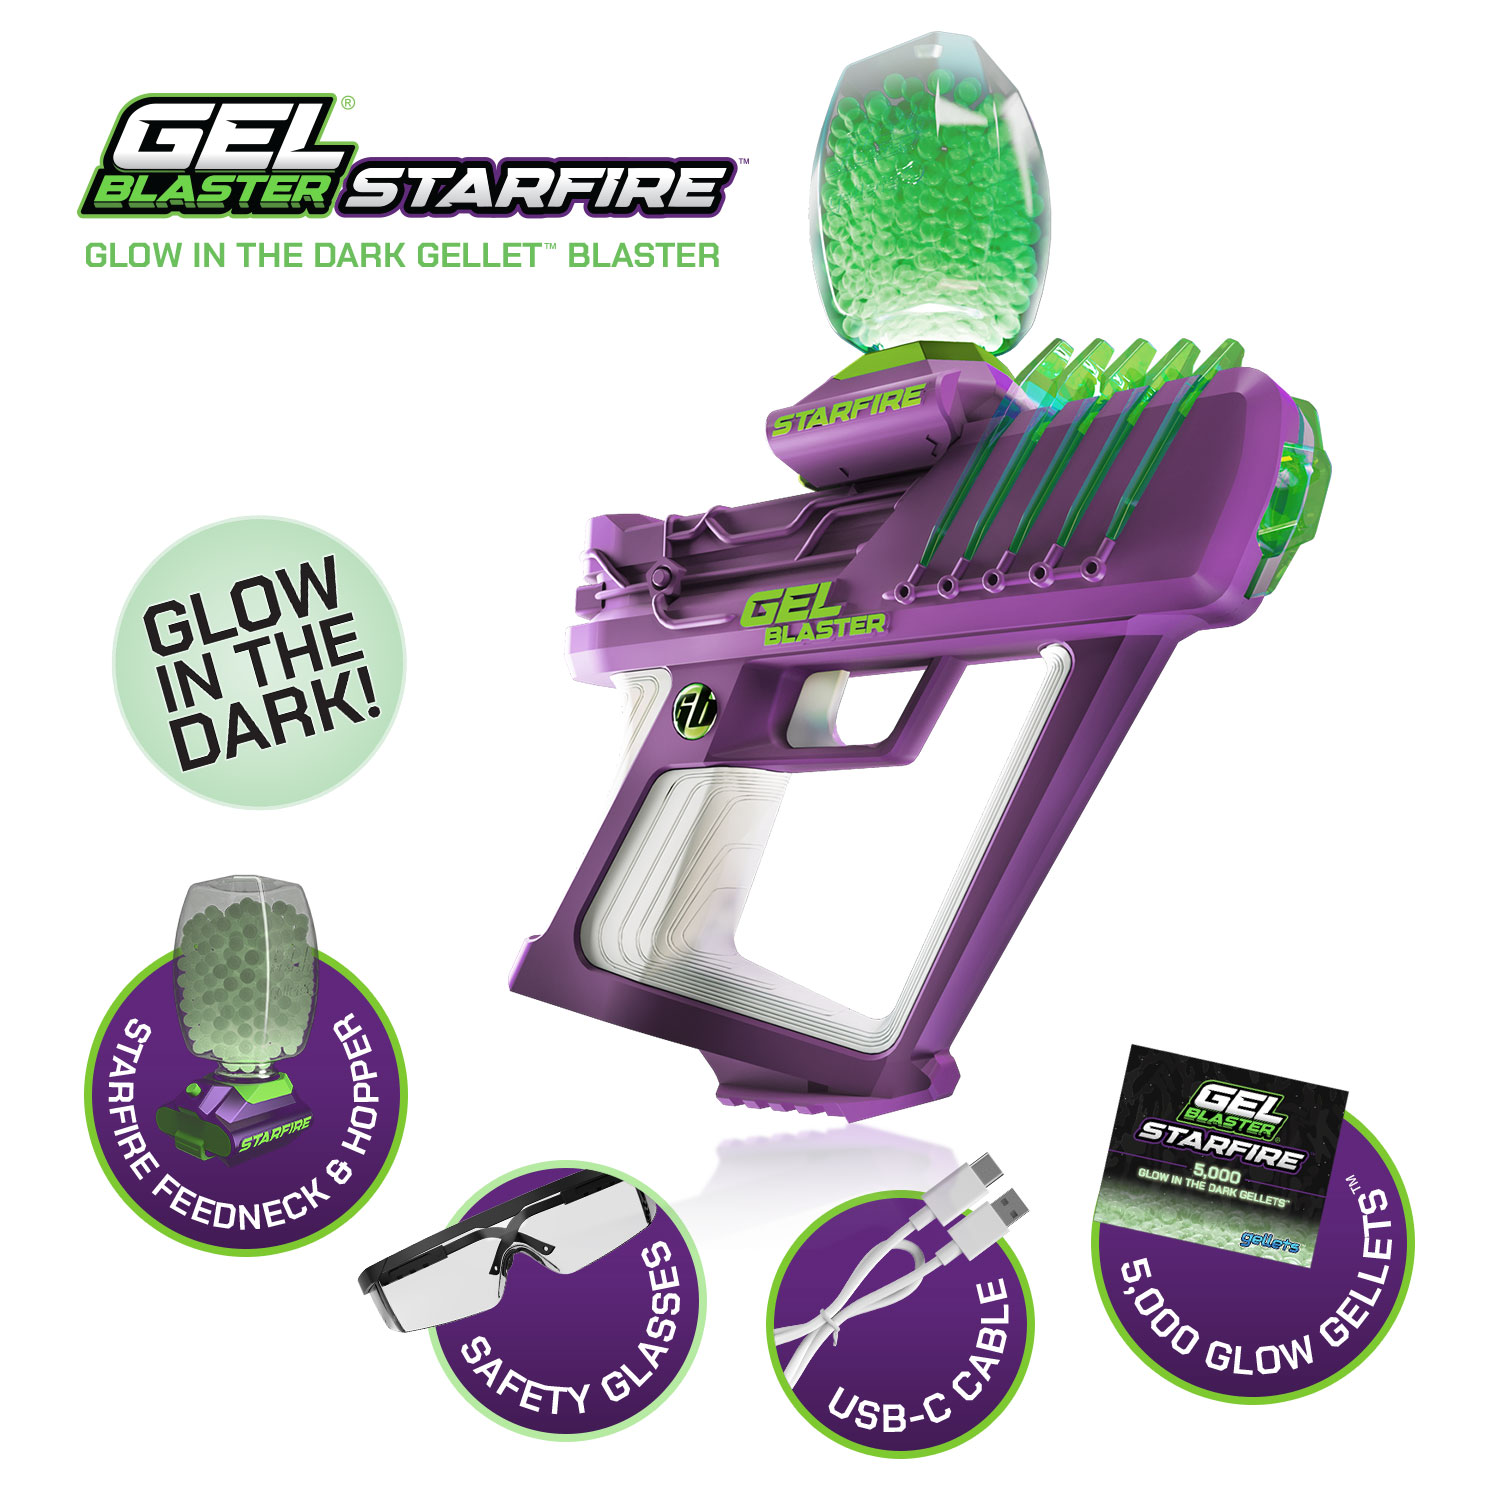 Gel Blaster Starfire, Glow-in-the-Dark Gellet Blaster, with 5,000 Starfire Glow-in-the-Dark Gellets - image 4 of 12